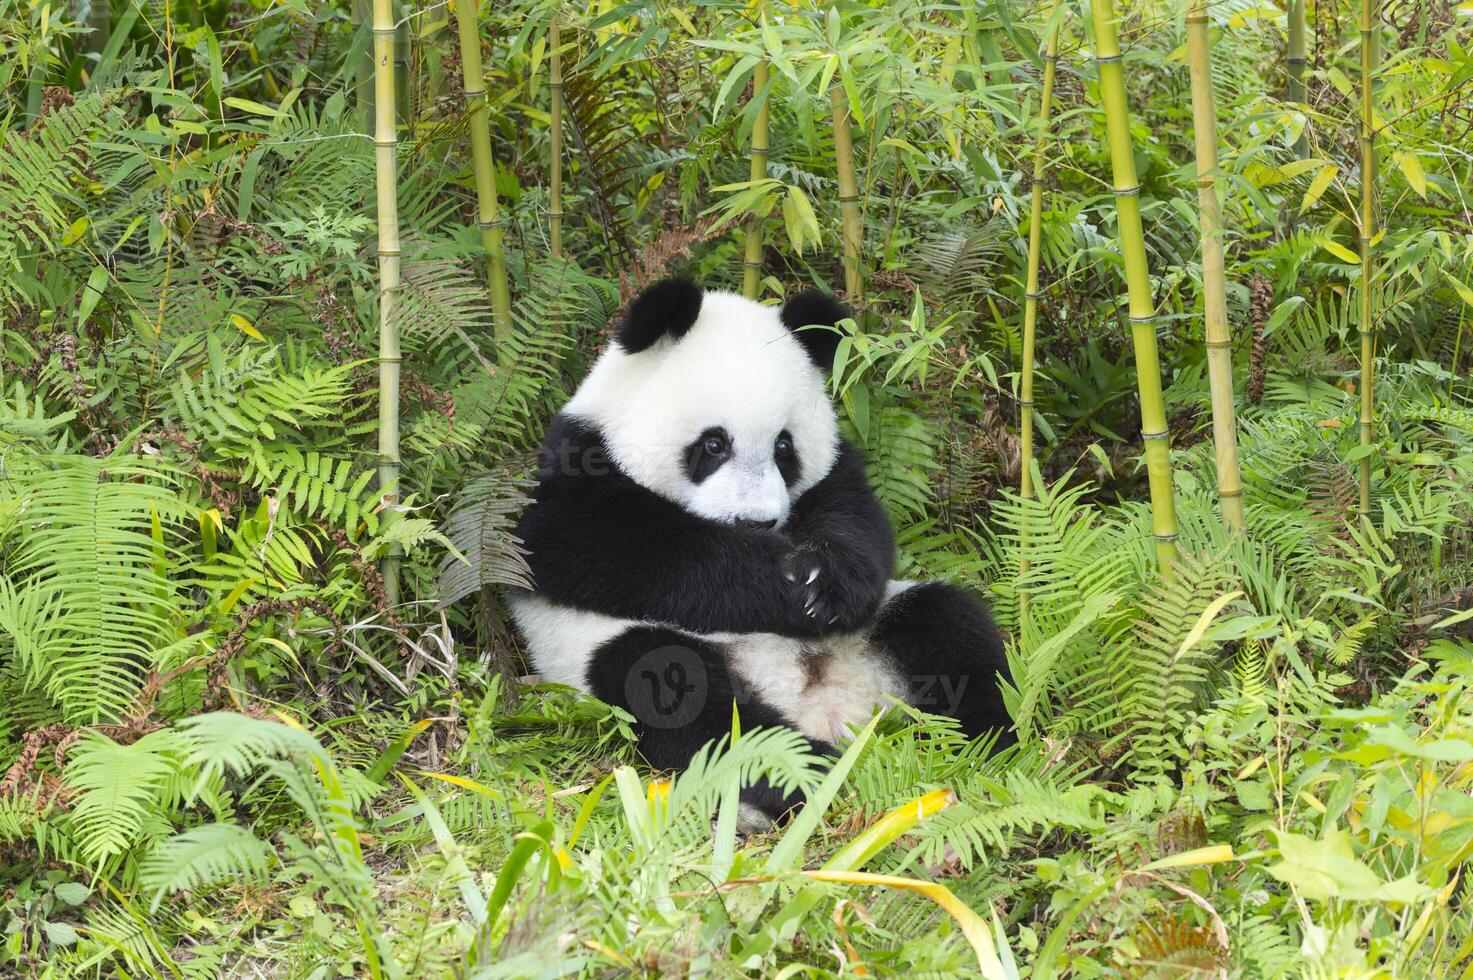 dos años Envejecido joven gigante panda, ailuropoda melanoleuca, chengdú, sichuan, China foto